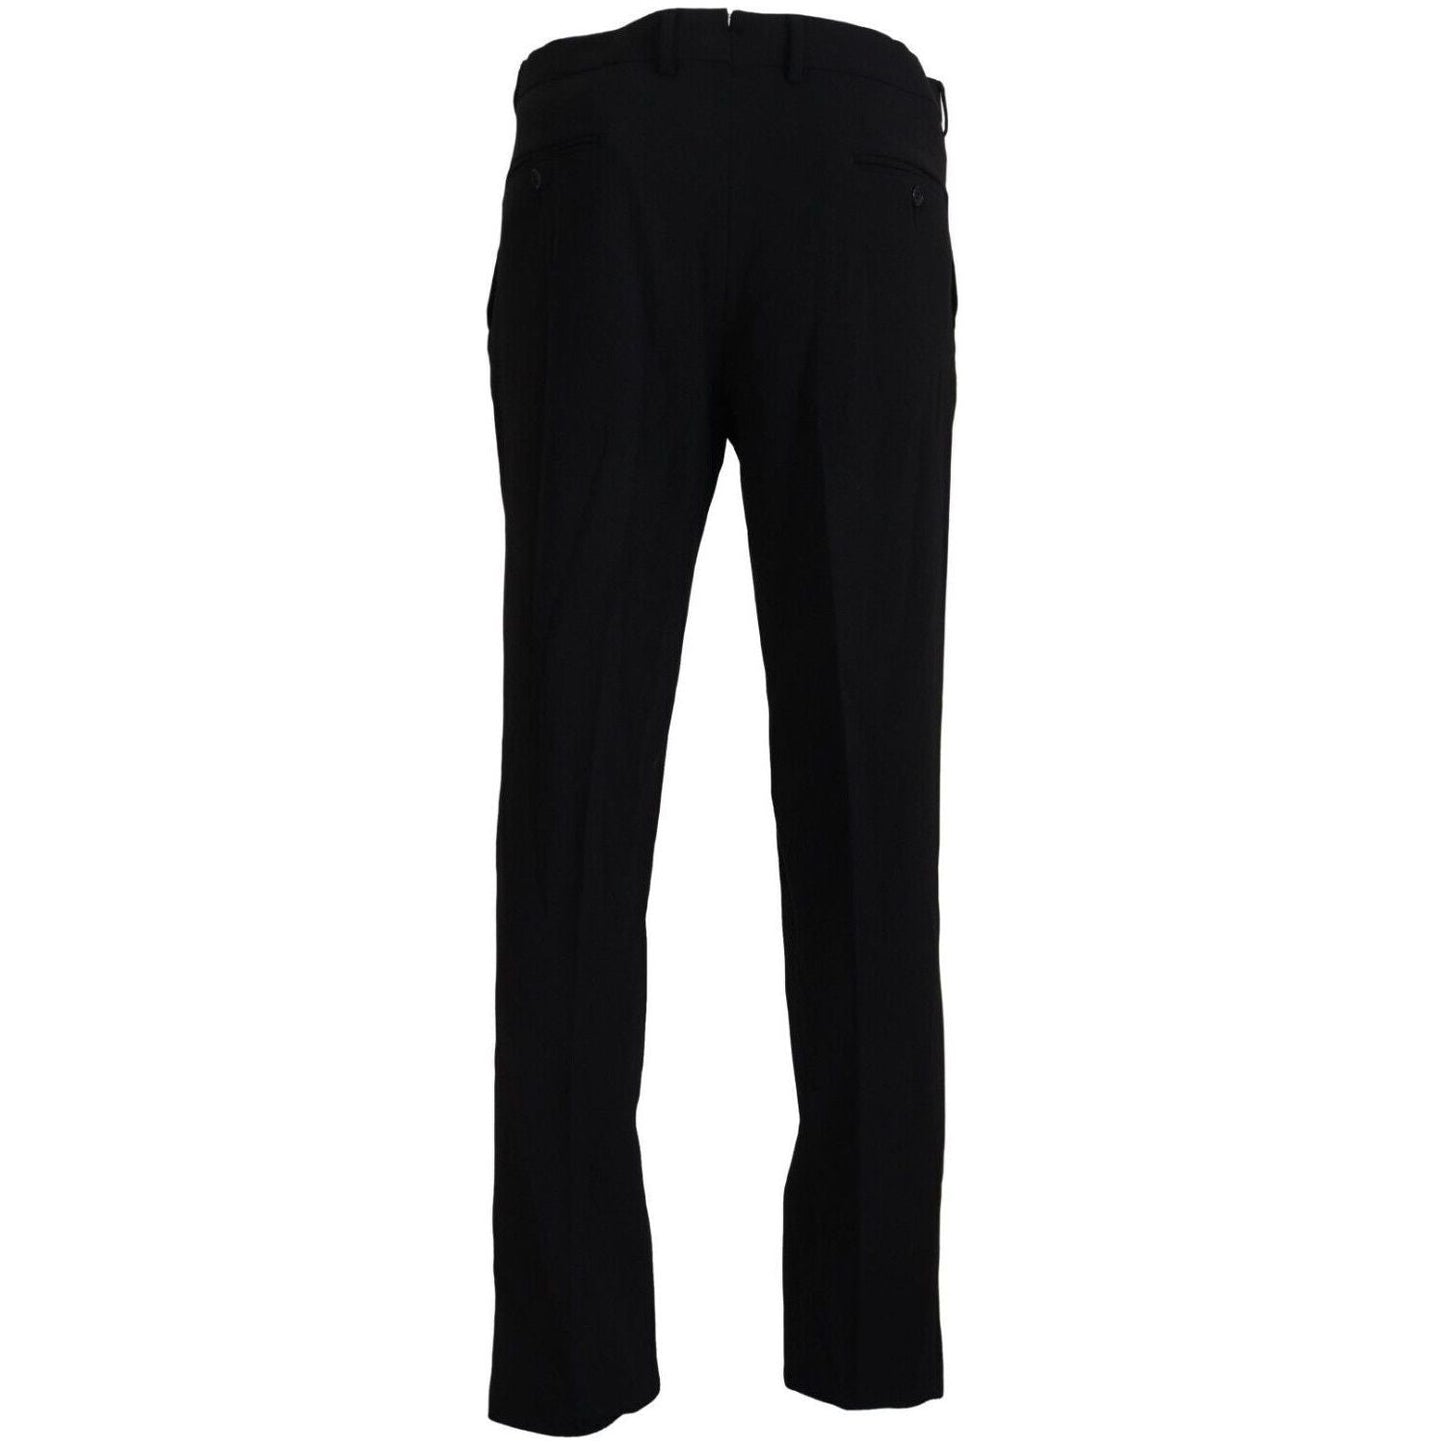 BENCIVENGA Elegant Black MainLine Trousers black-straight-fit-men-formal-trousers-pants